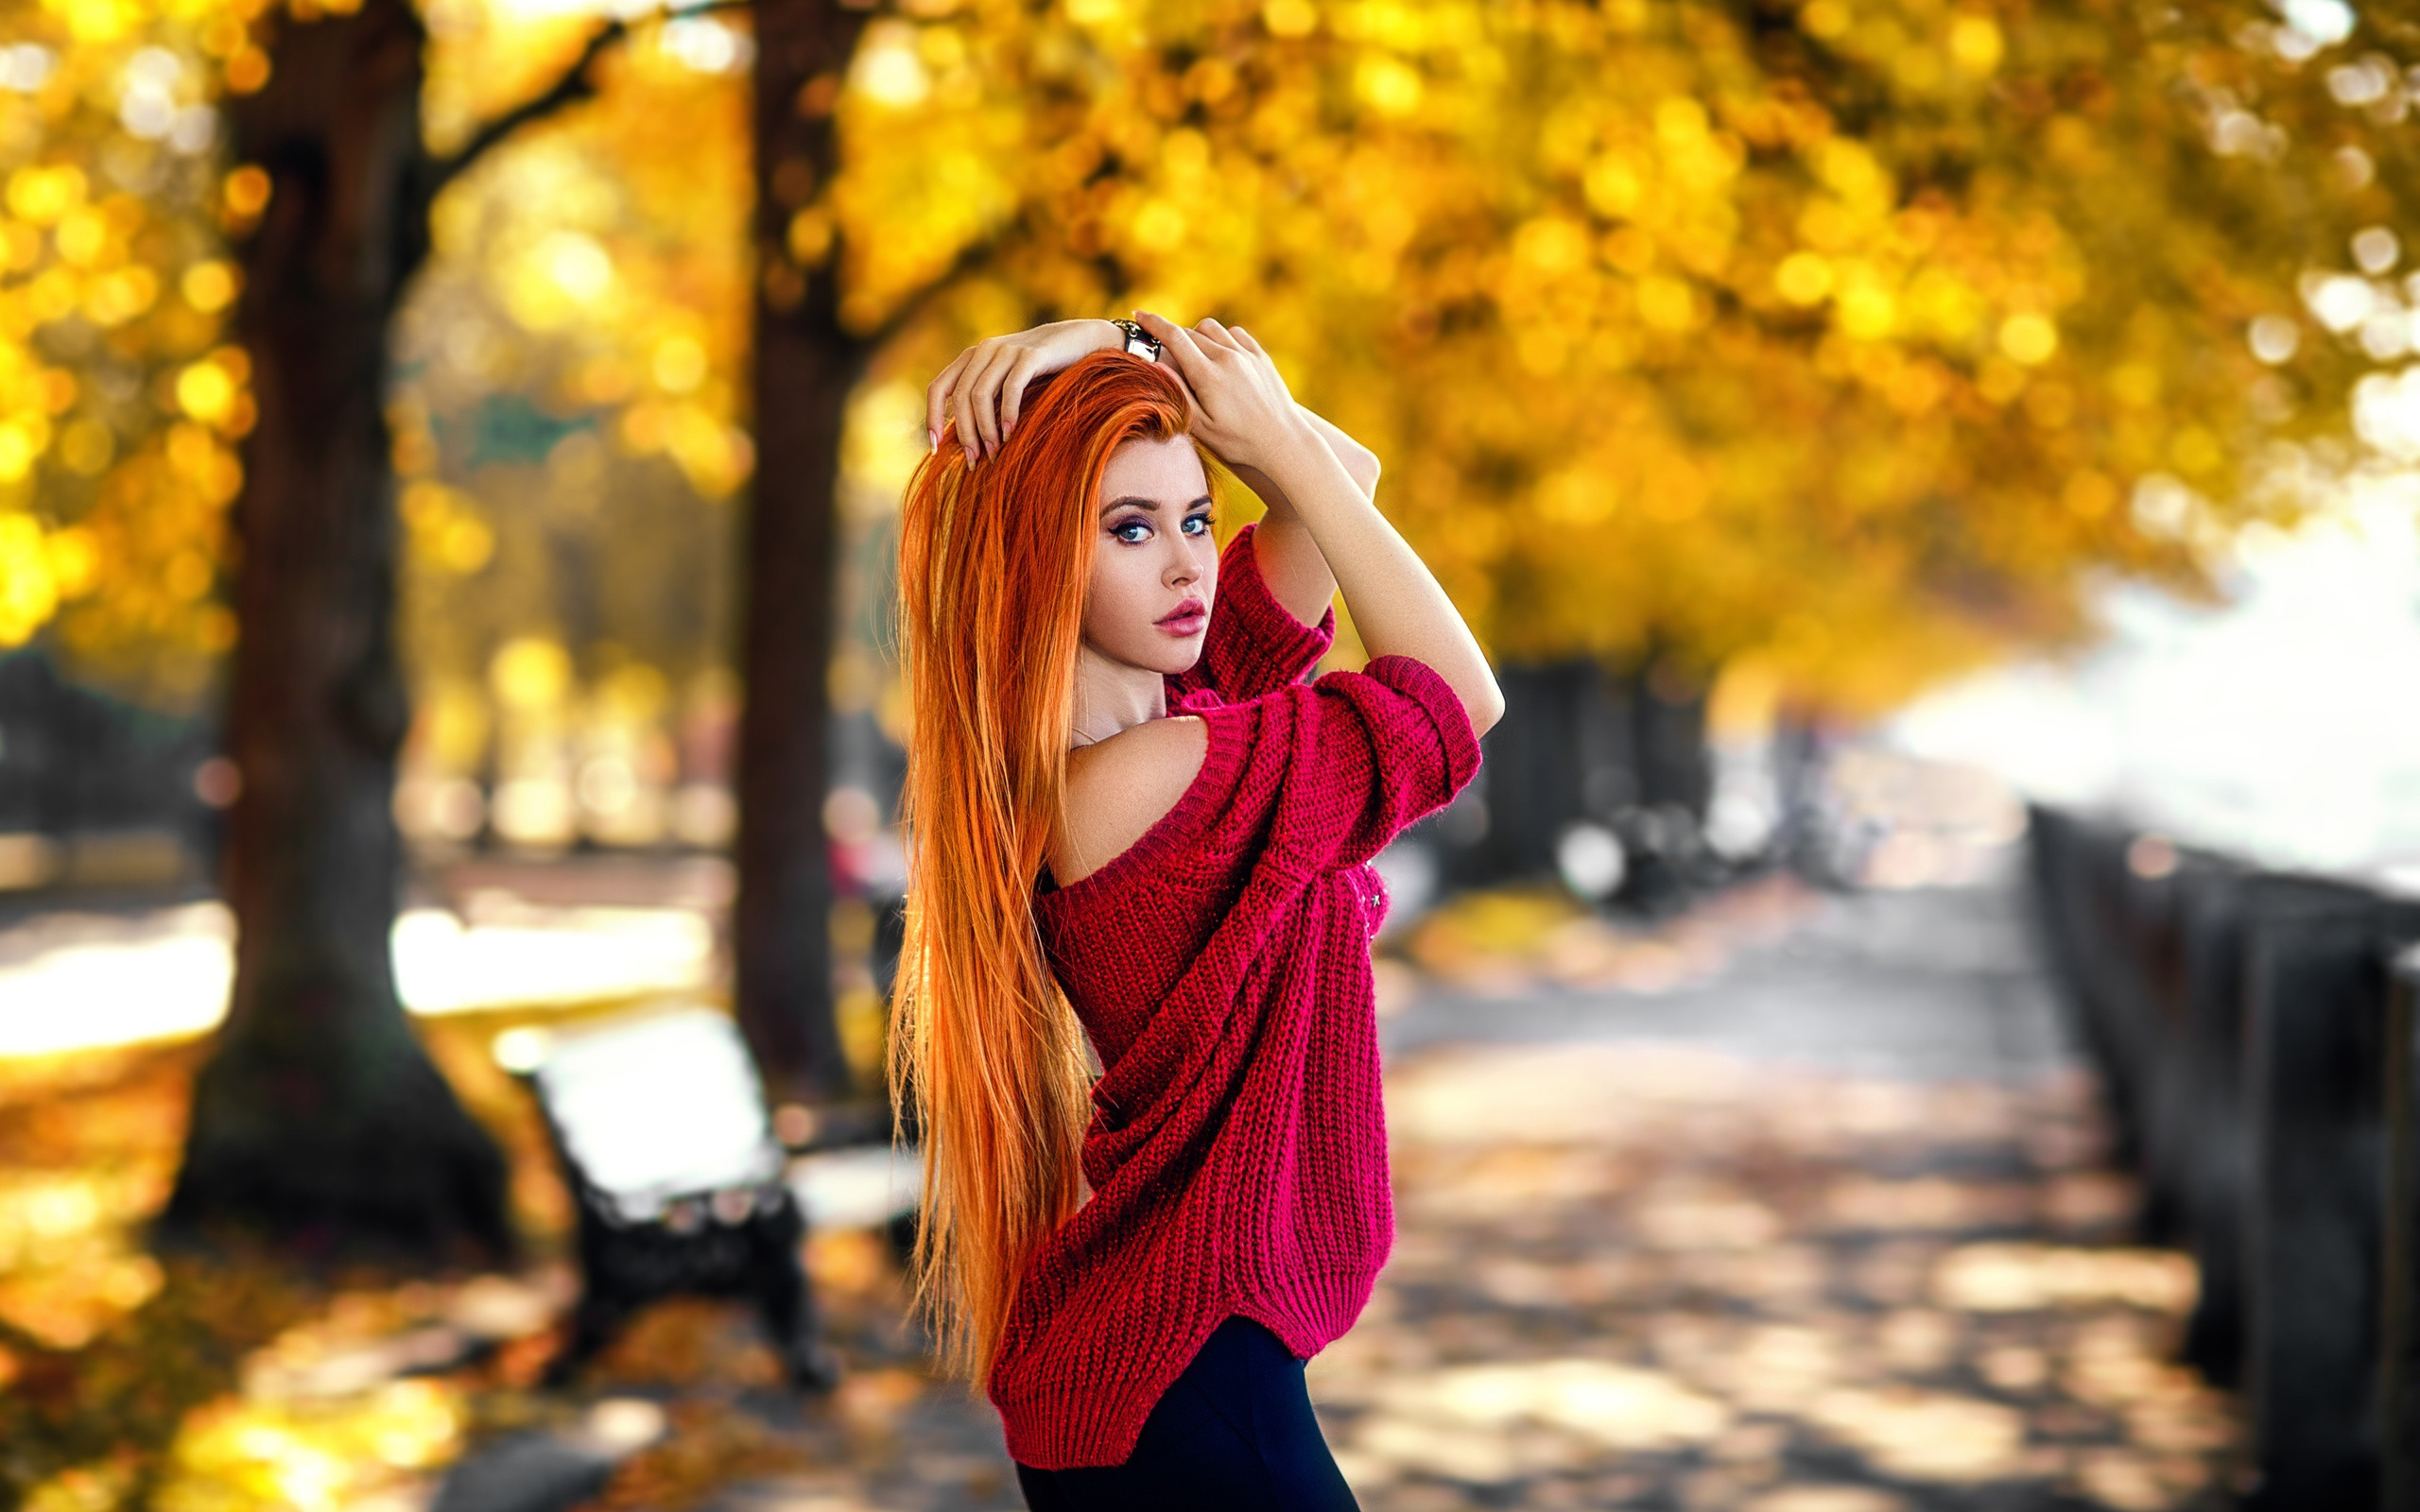 Download Gorgeous woman, outdoor, autumn wallpaper, 2560x Dual Wide, Widescreen 16: Widescreen